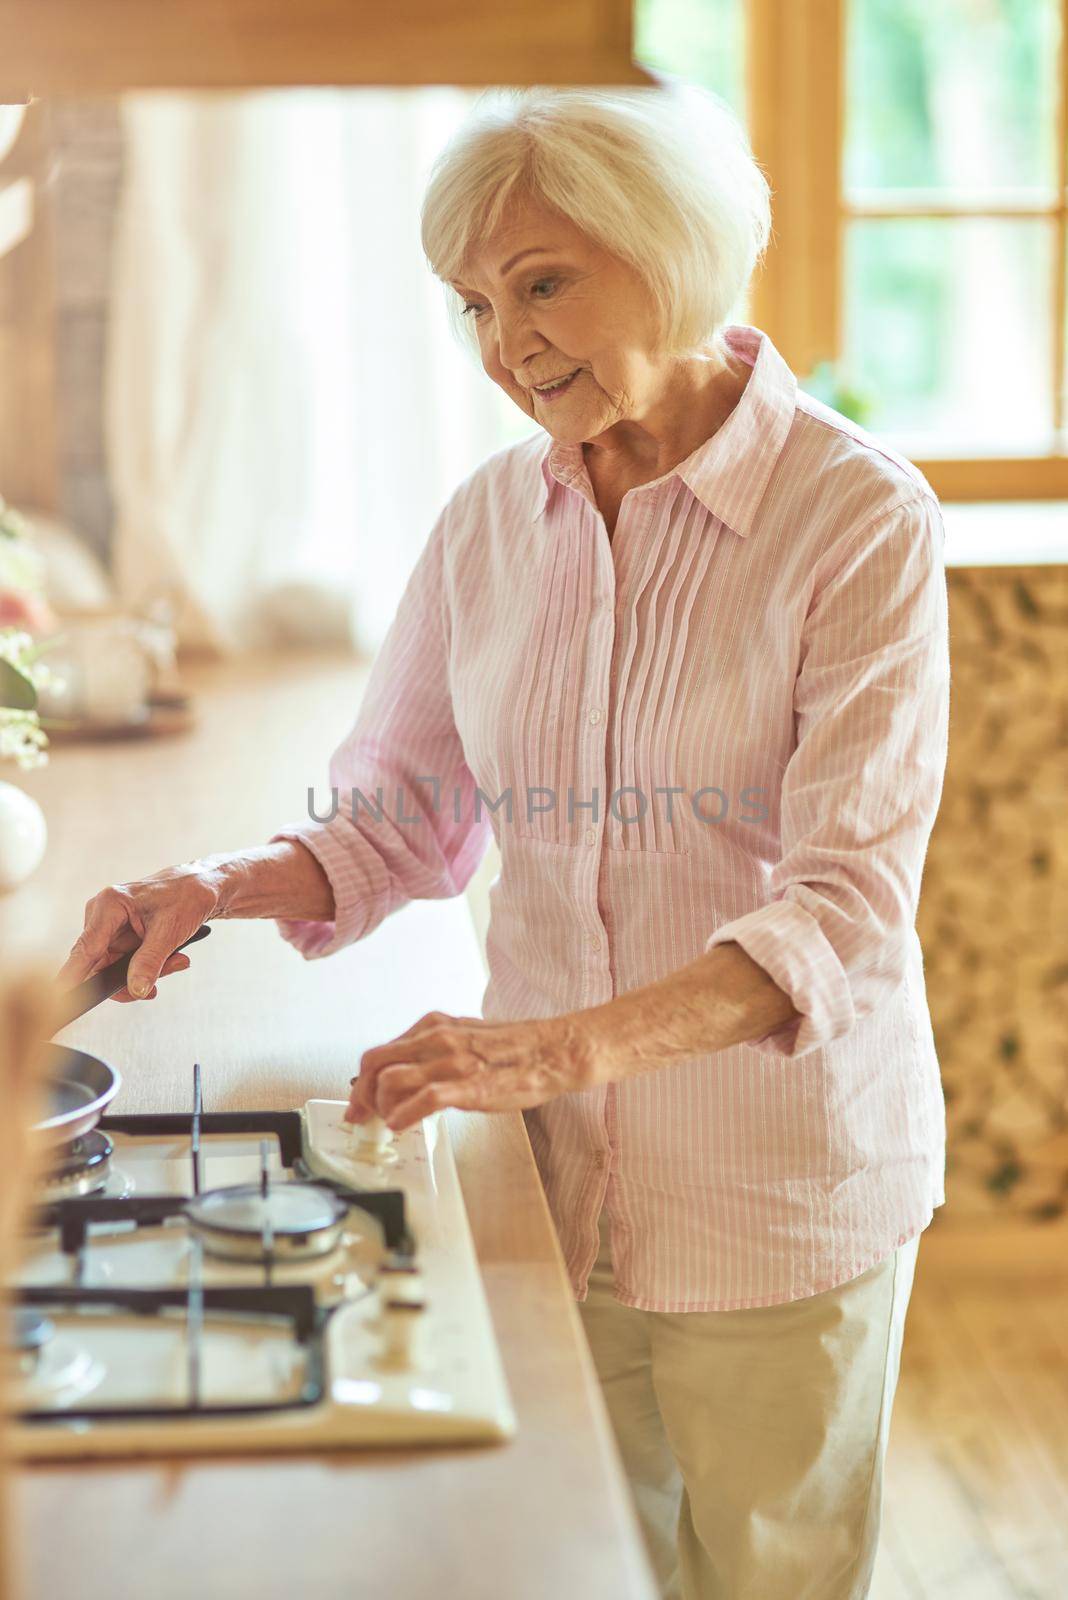 Happy elder lady standing in the kitchen and preparing food by friendsstock